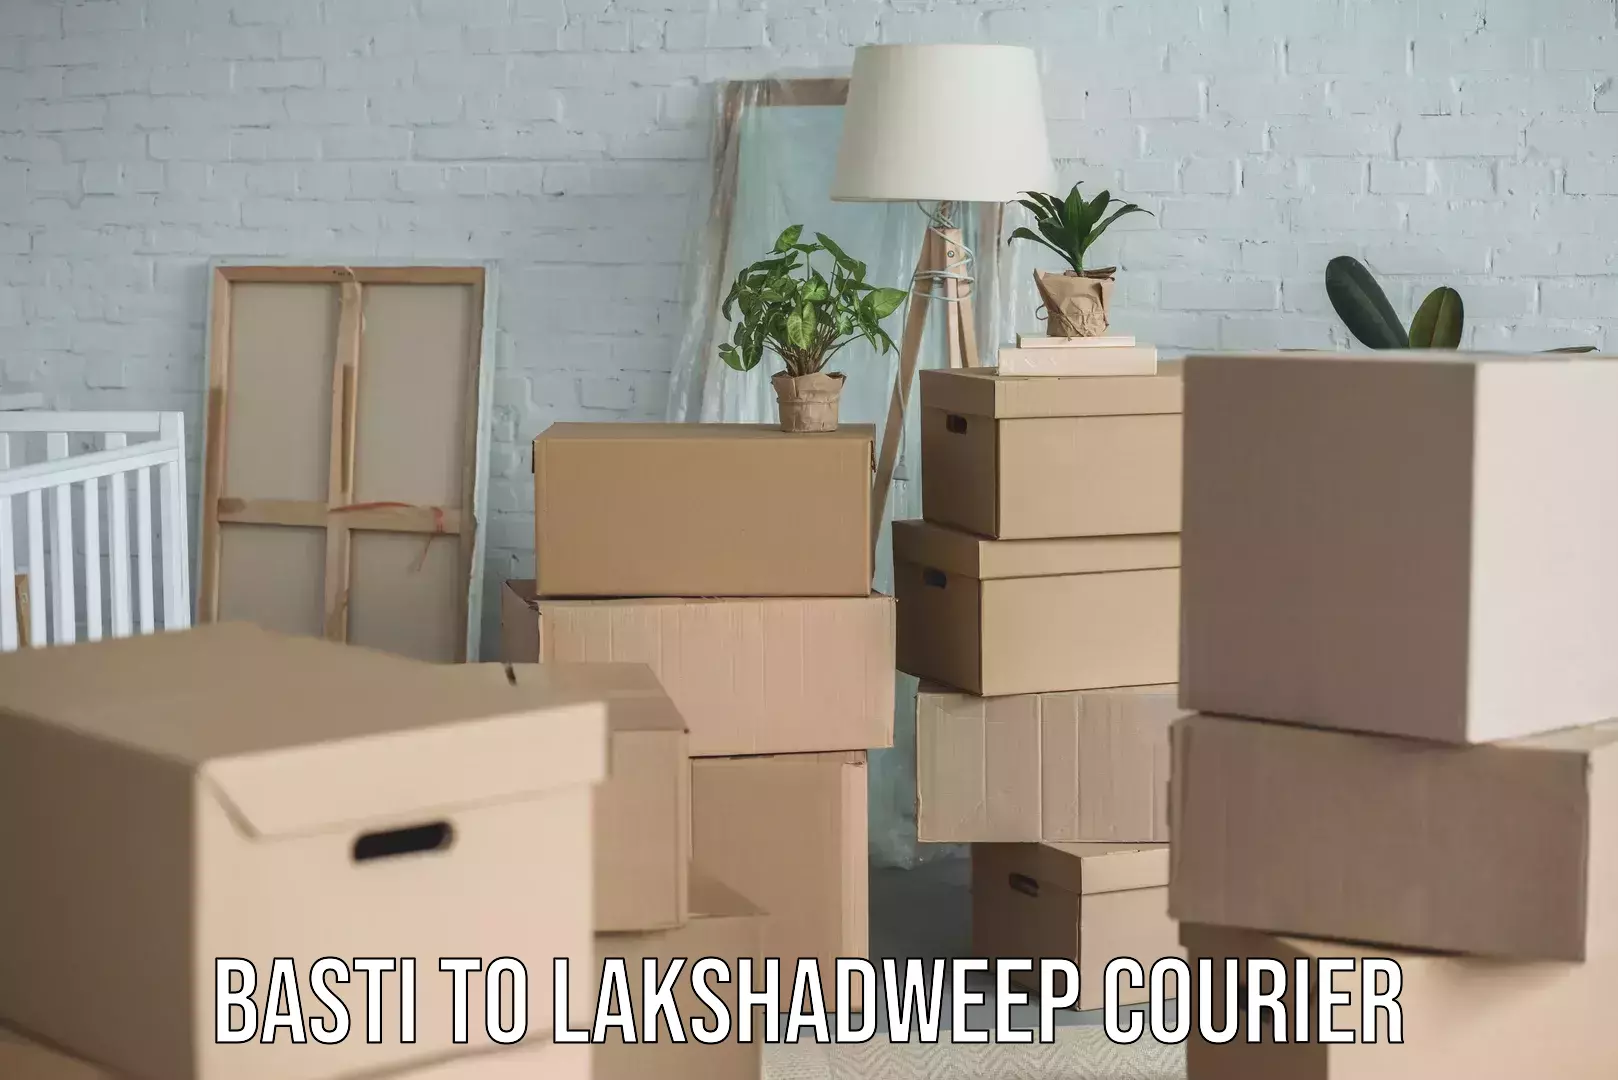 Supply chain efficiency Basti to Lakshadweep